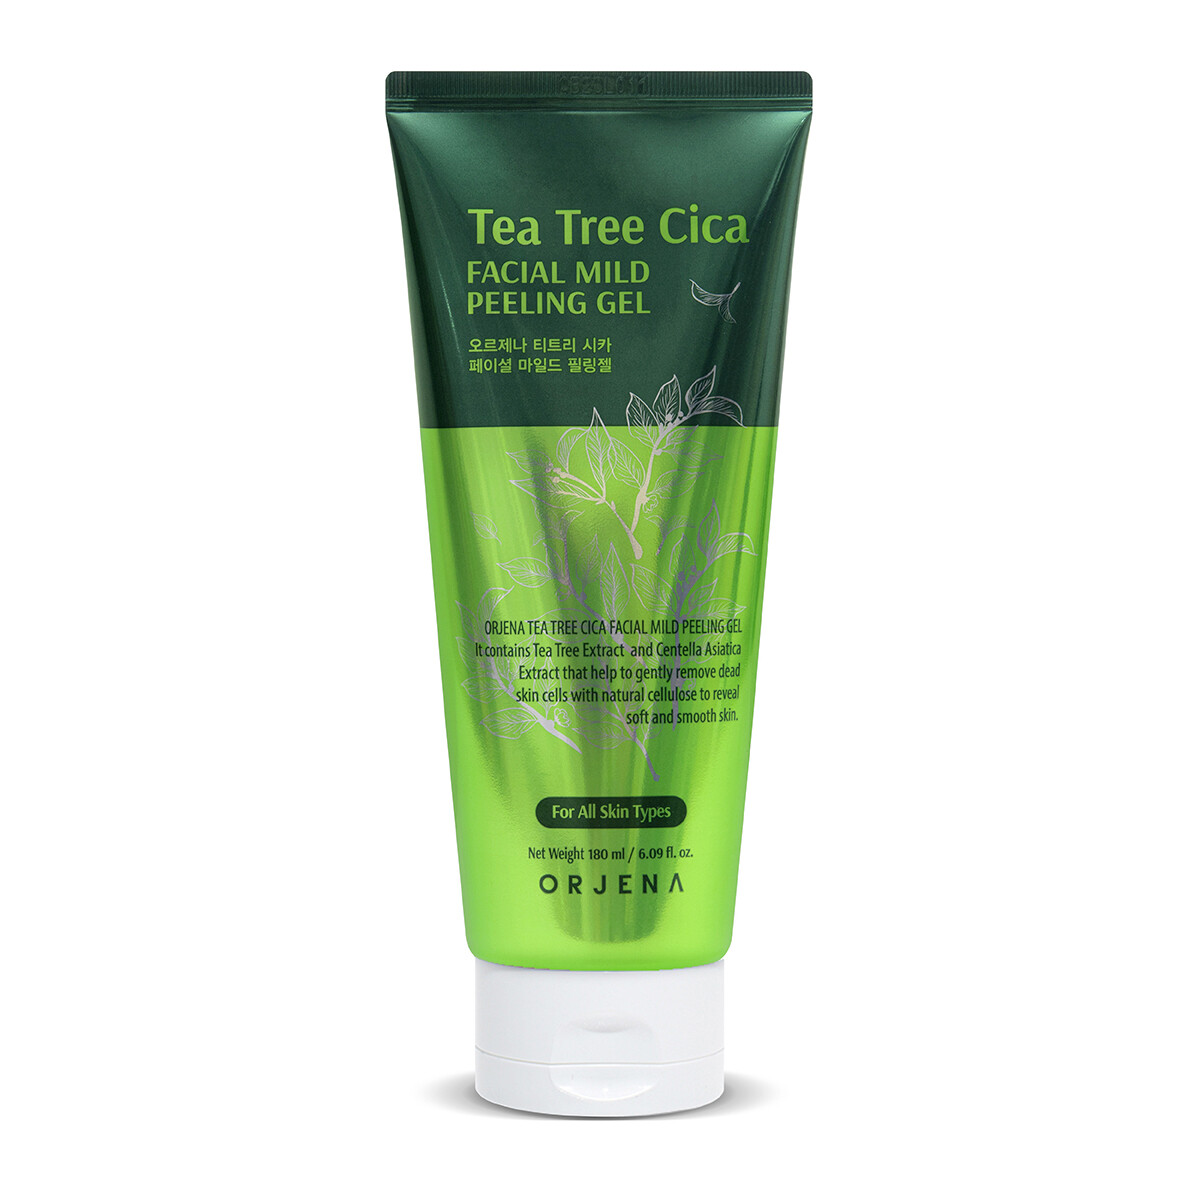 Tea tree cica facial mild peeling gel 180ml